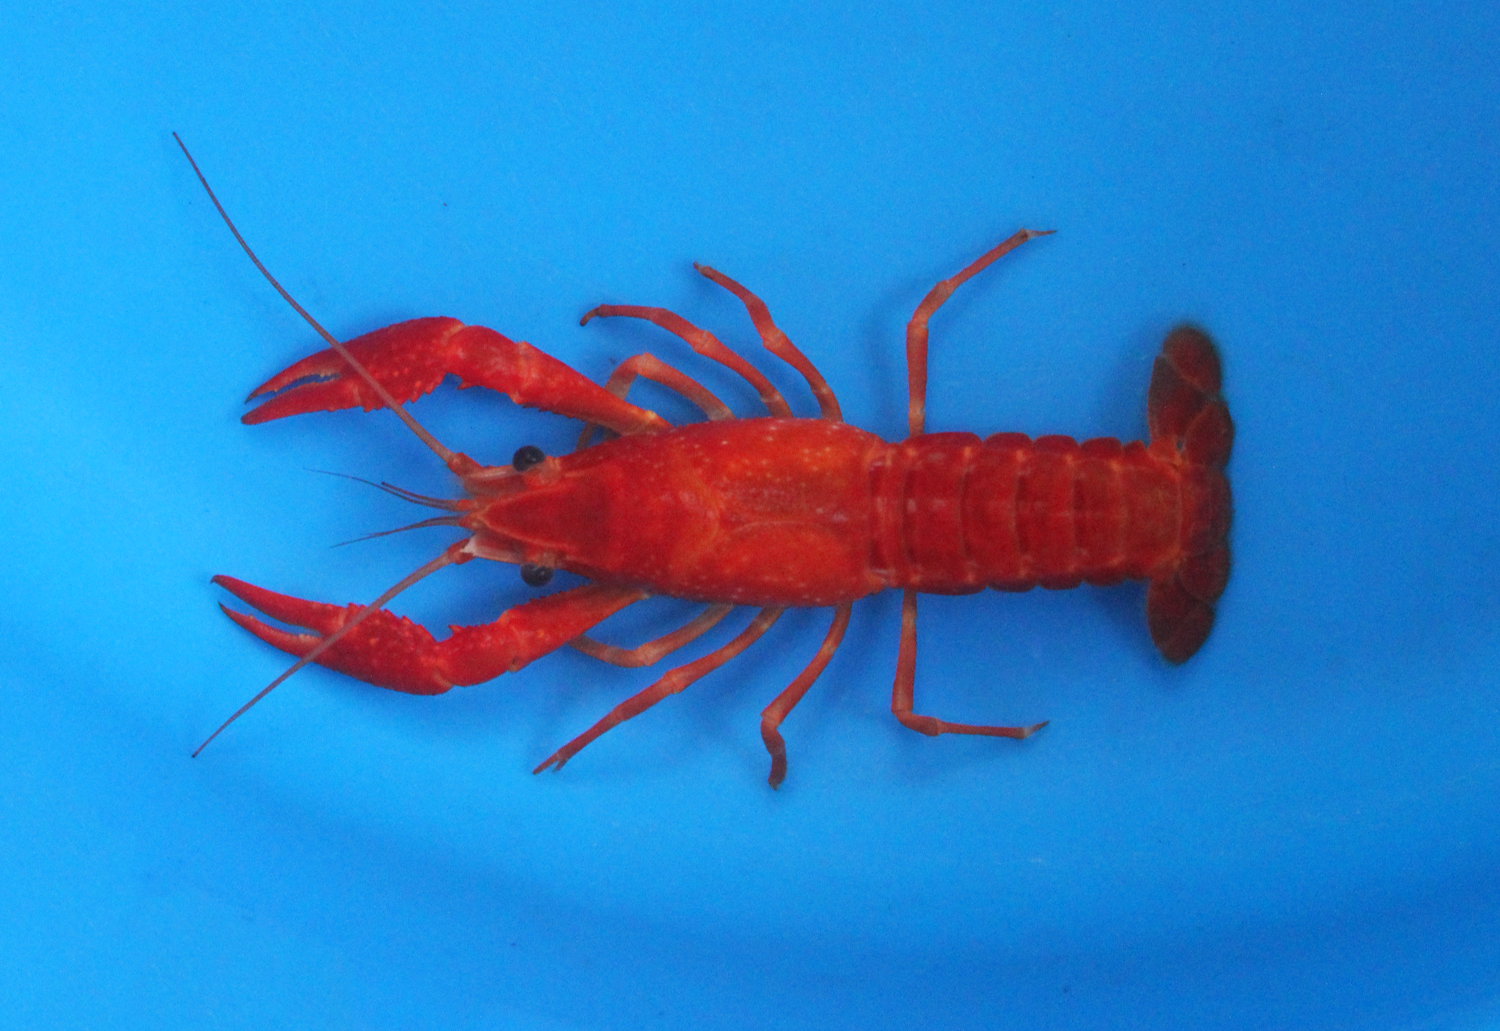 2-3 inch Red Crayfish